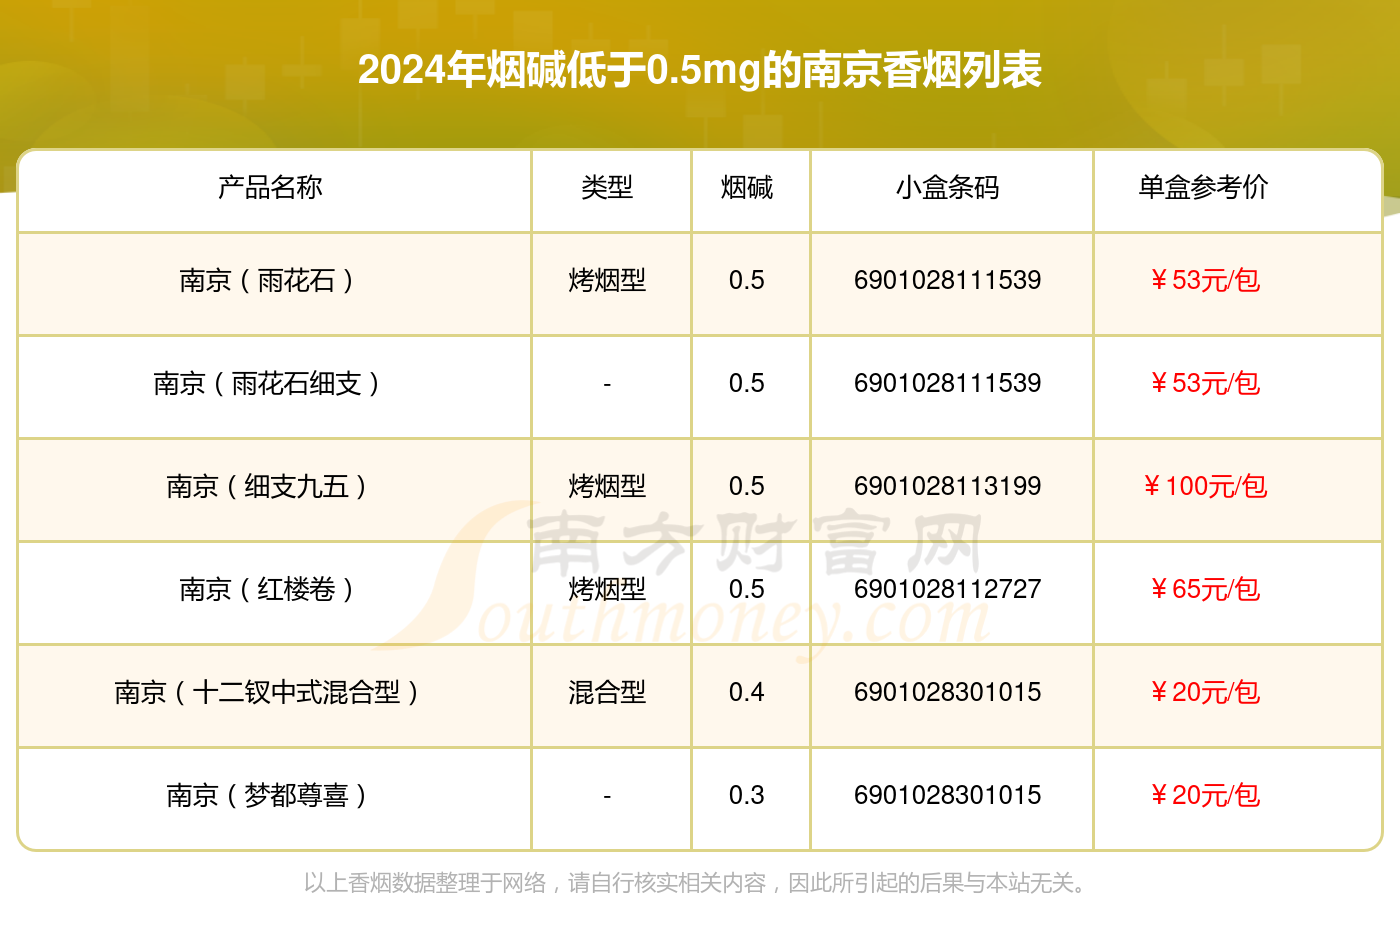 5mg的南京香烟列表